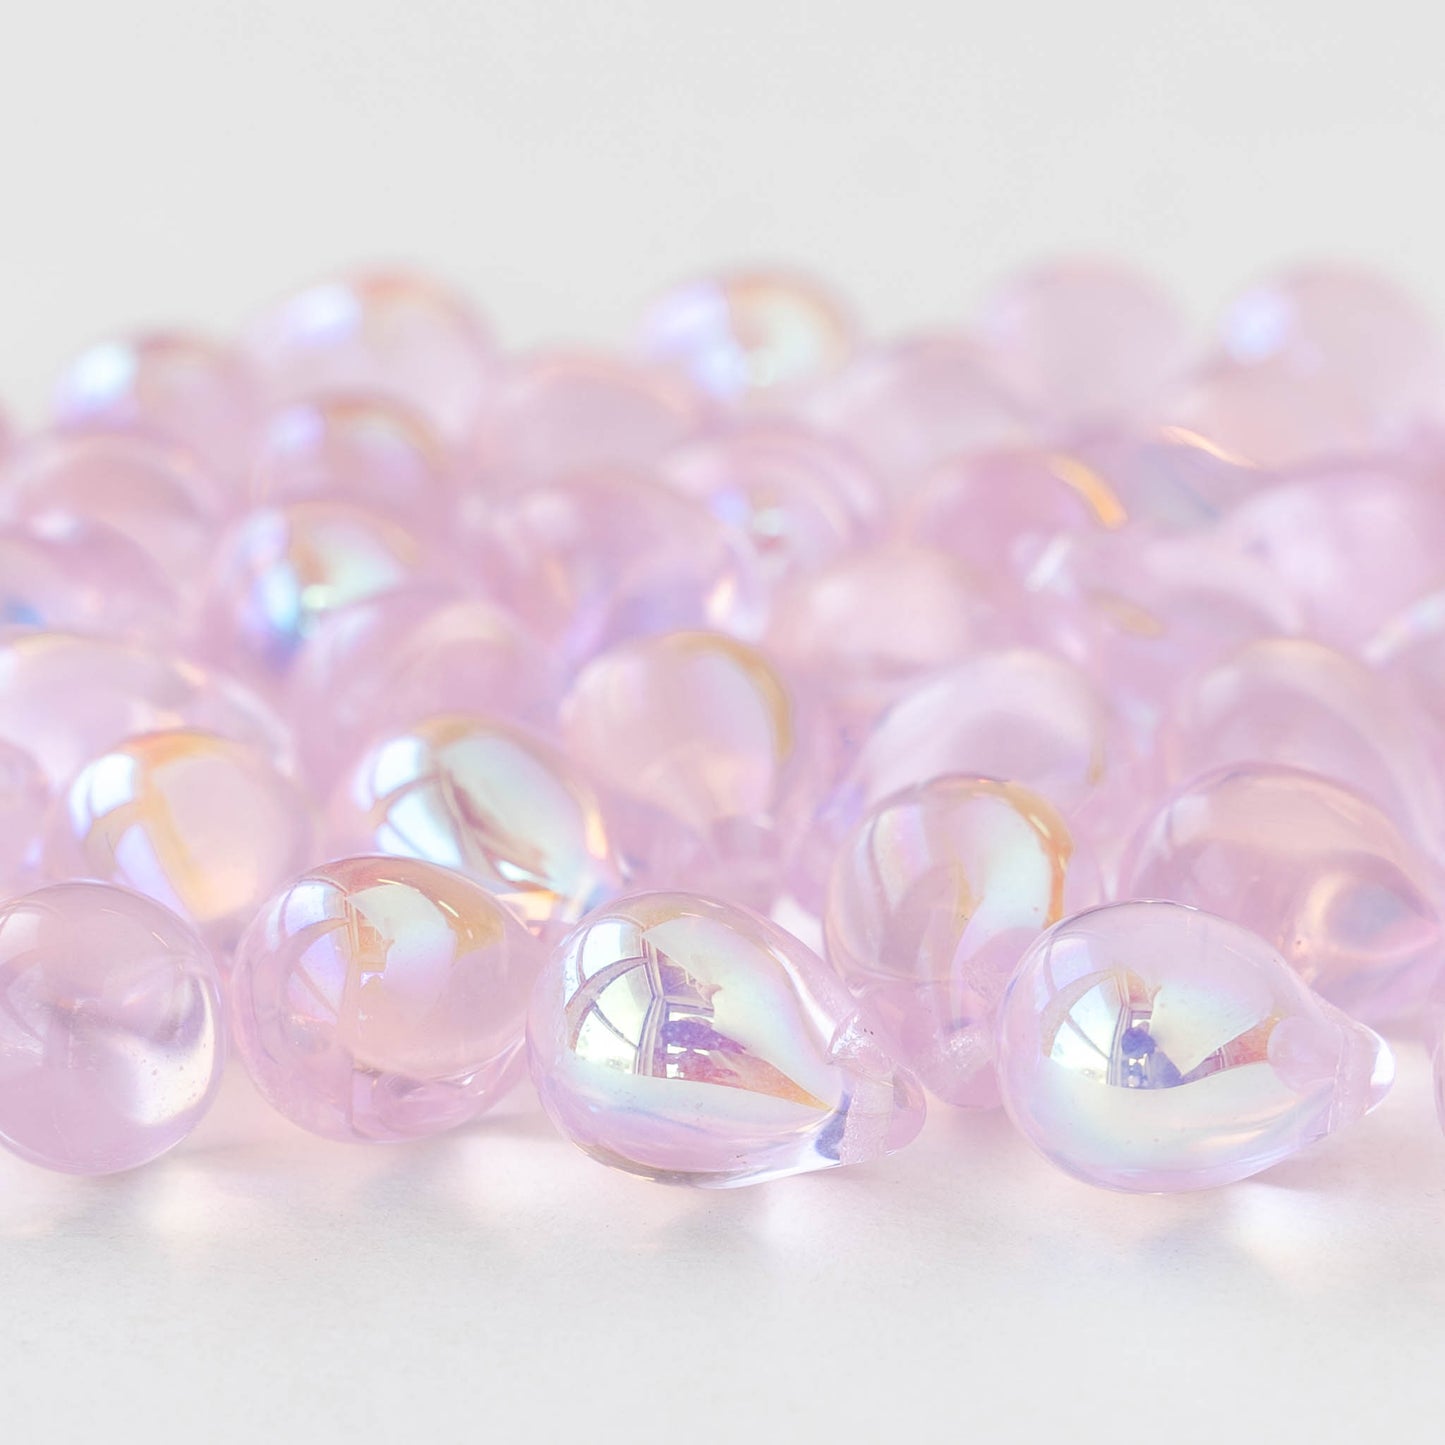 10x14mm Glass Teardrop Beads - Pink AB - Choose Amount